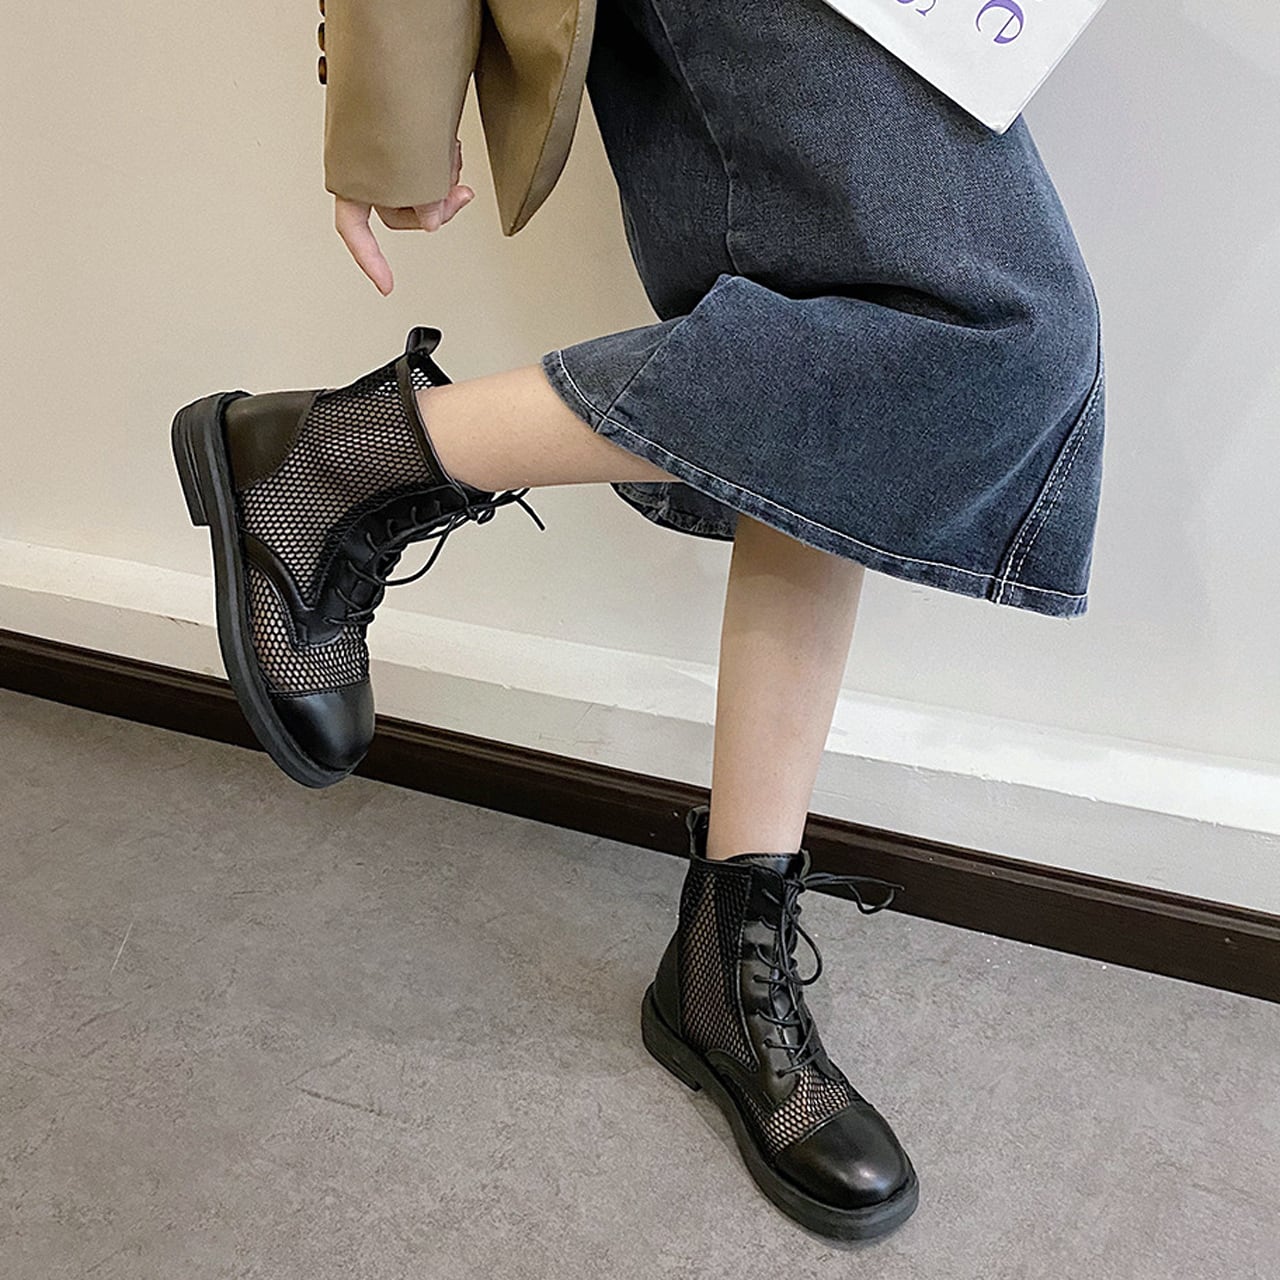 Regit Mesh Mennish Boots Black 韓国 靴 シューズ ブーツ メンズライク ミリタリー メッシュ 夏 カジュアル 10代 代 プチプラ 映える 透け感 ネット通販 Regit